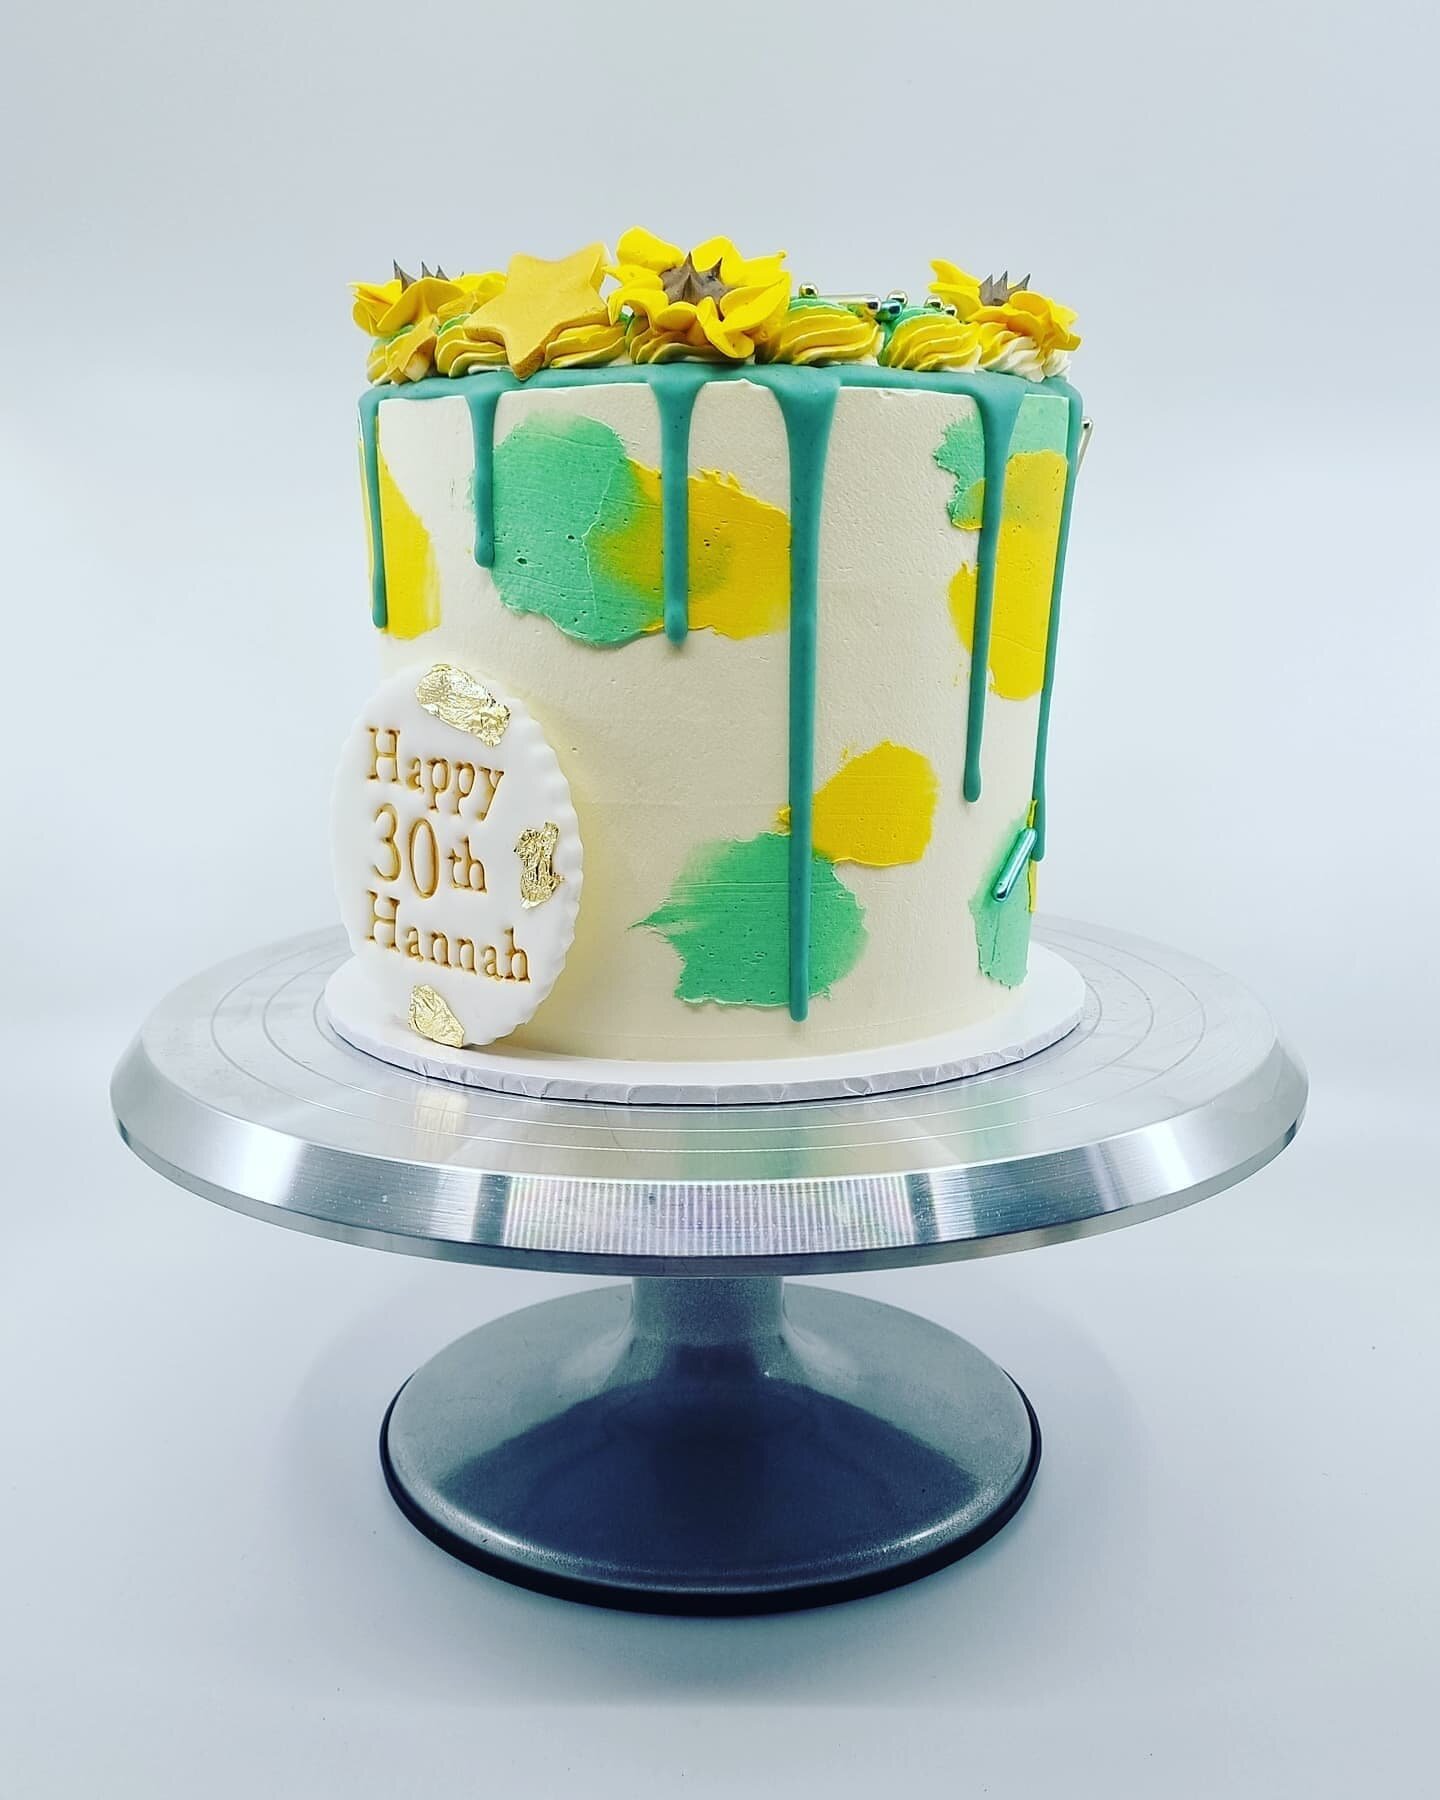 30th Birthday Cake